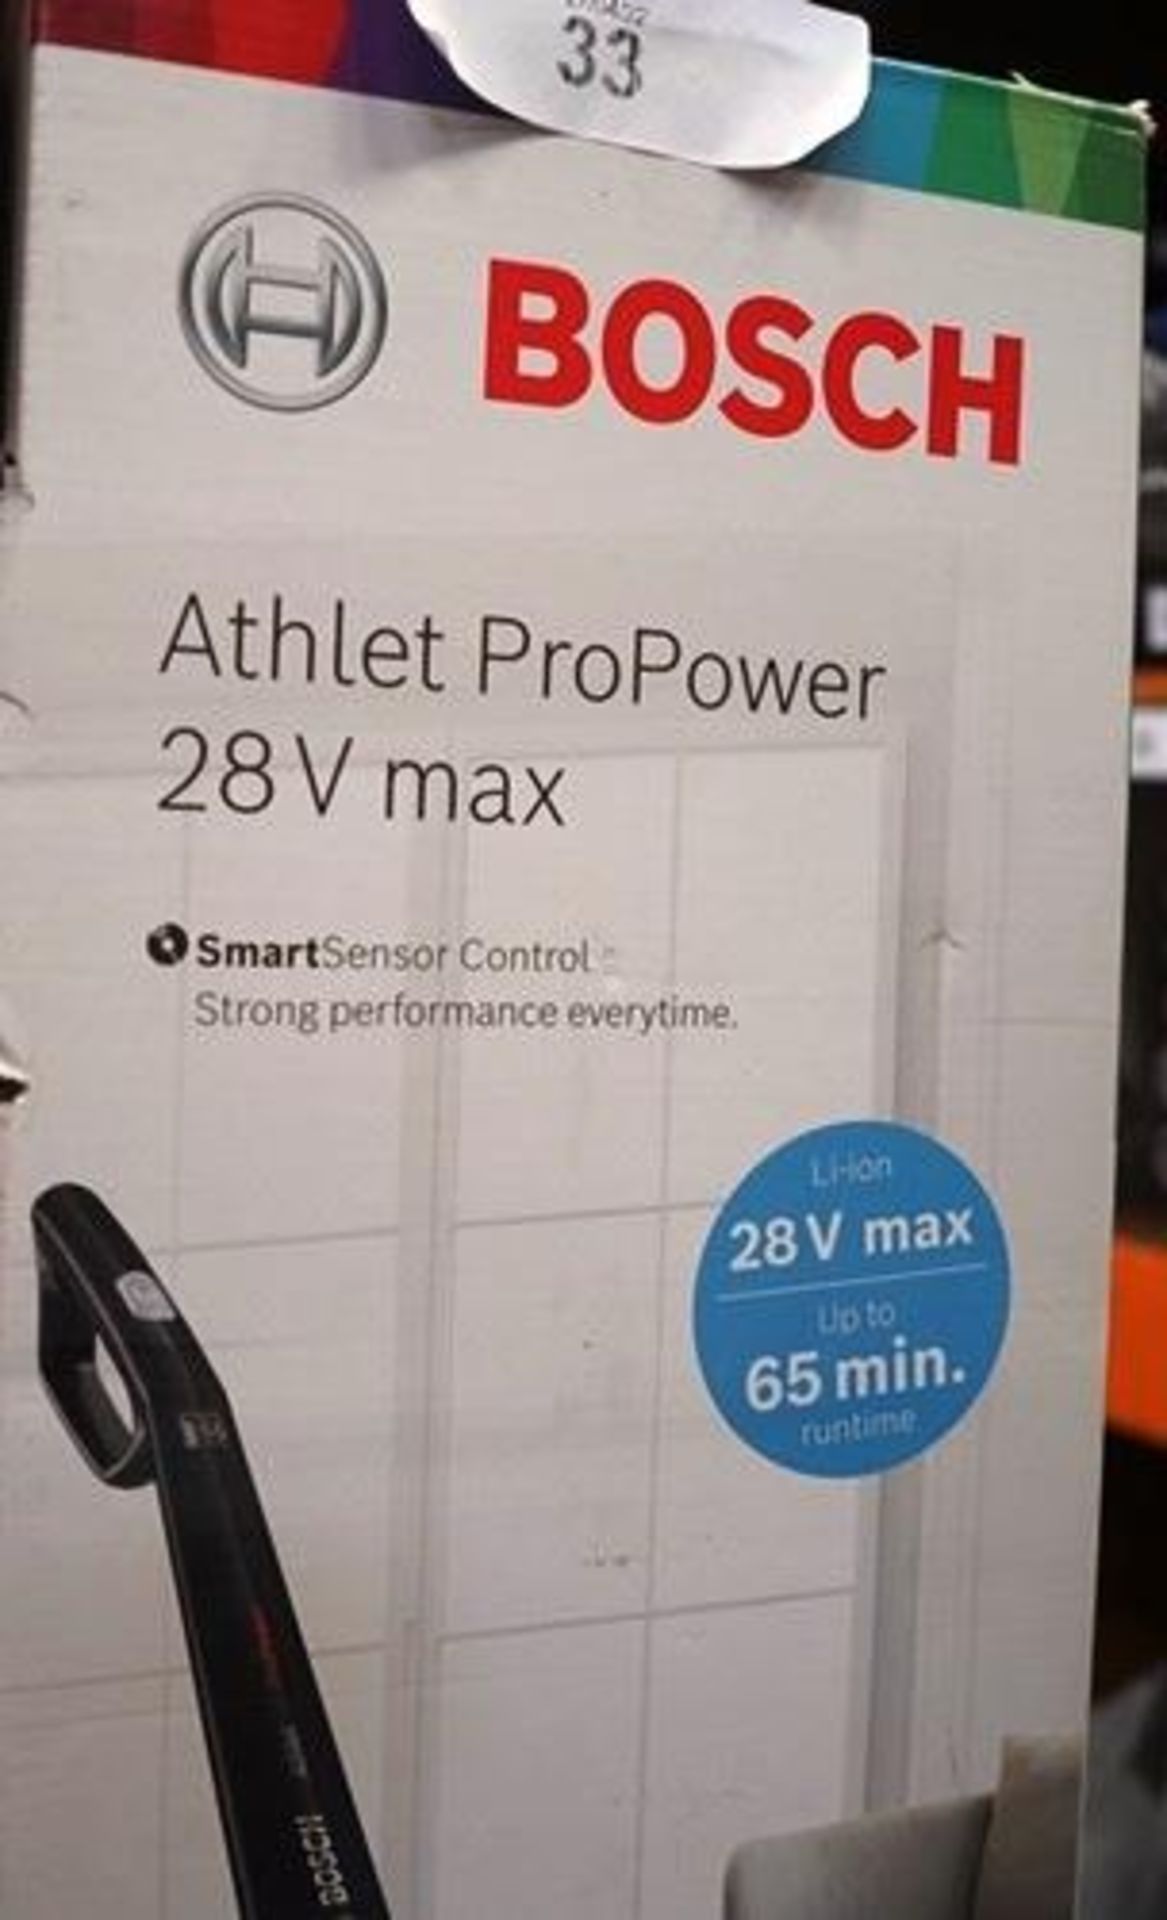 1 x Bosch Athlet Pro Power 28V vacuum, model BBH6POWGB - New in box (ES2)